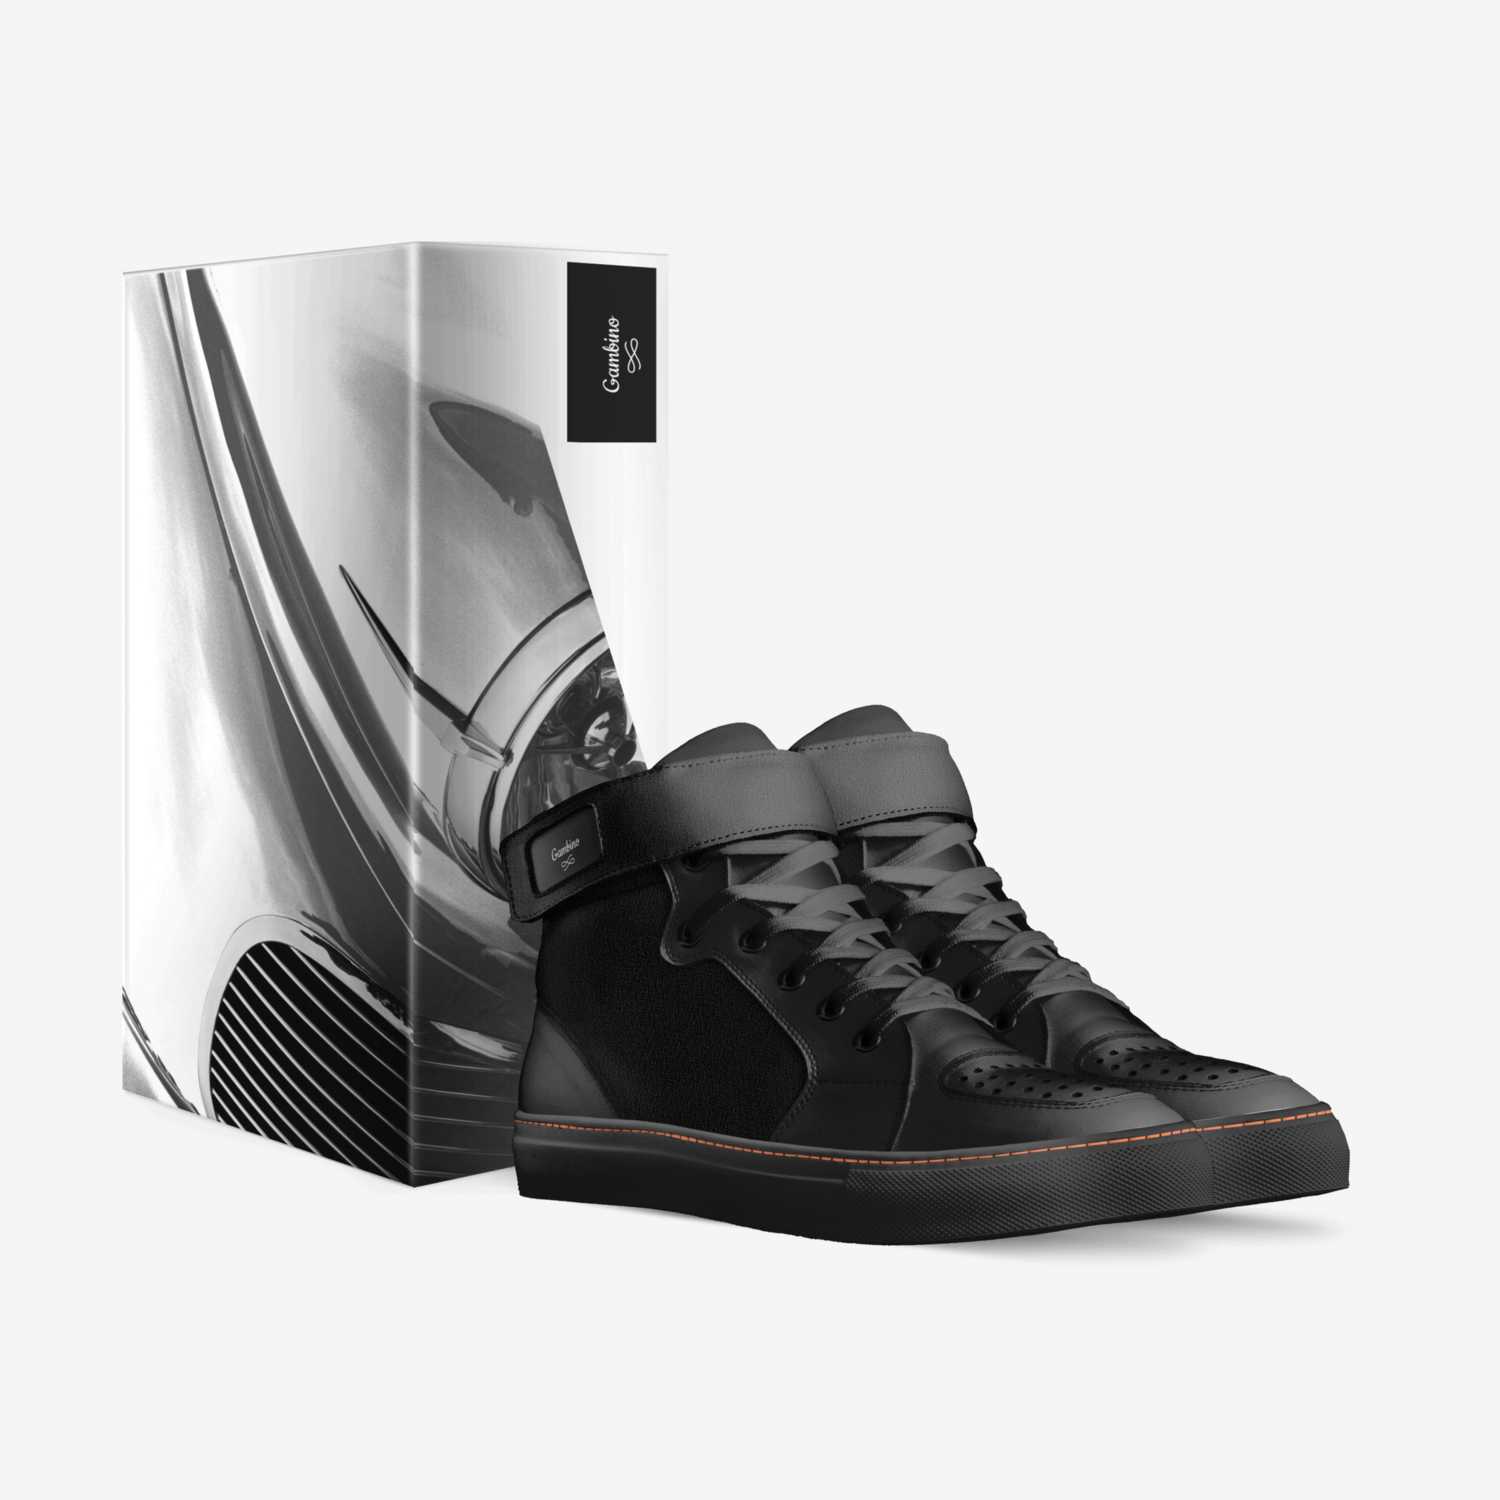 Gambino custom made in Italy shoes by Cesar Gambino | Box view